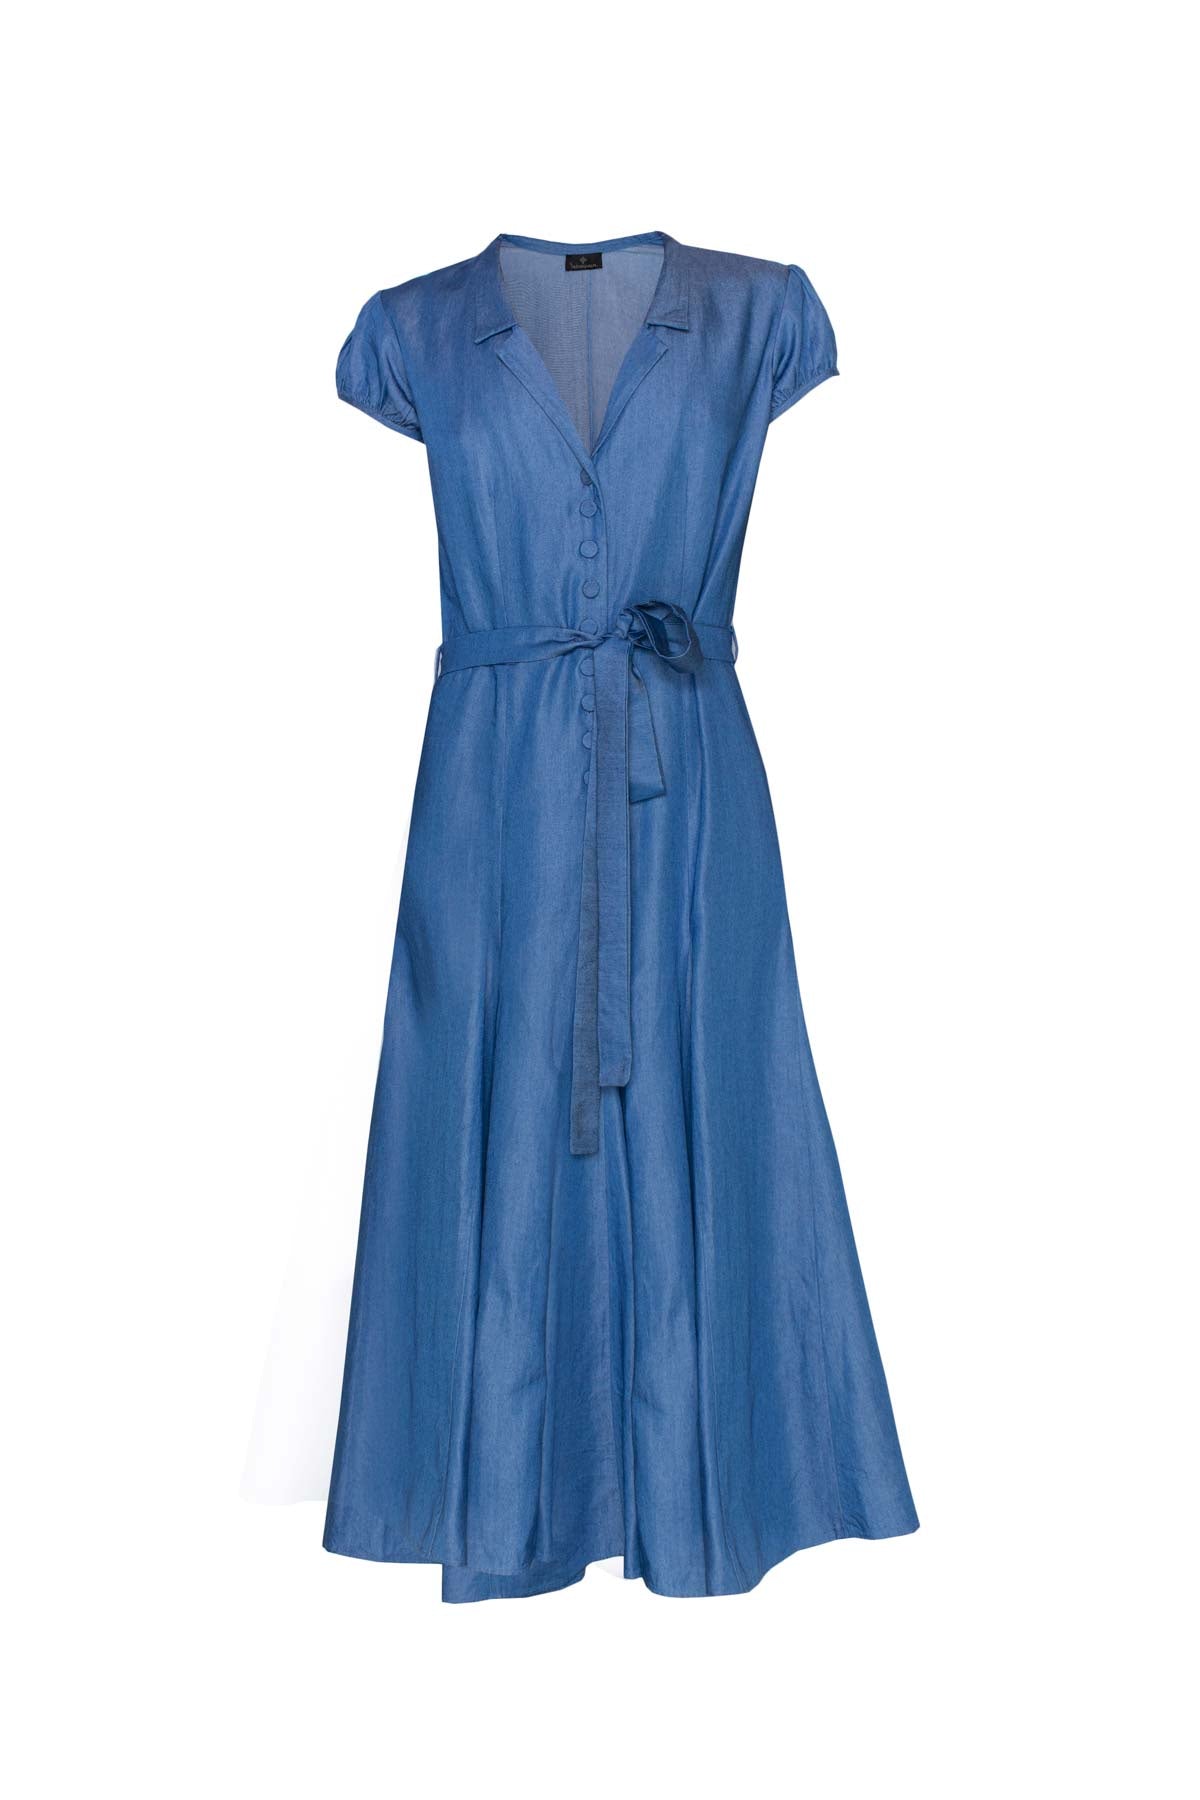 Denim Bugesha Dress - Blue